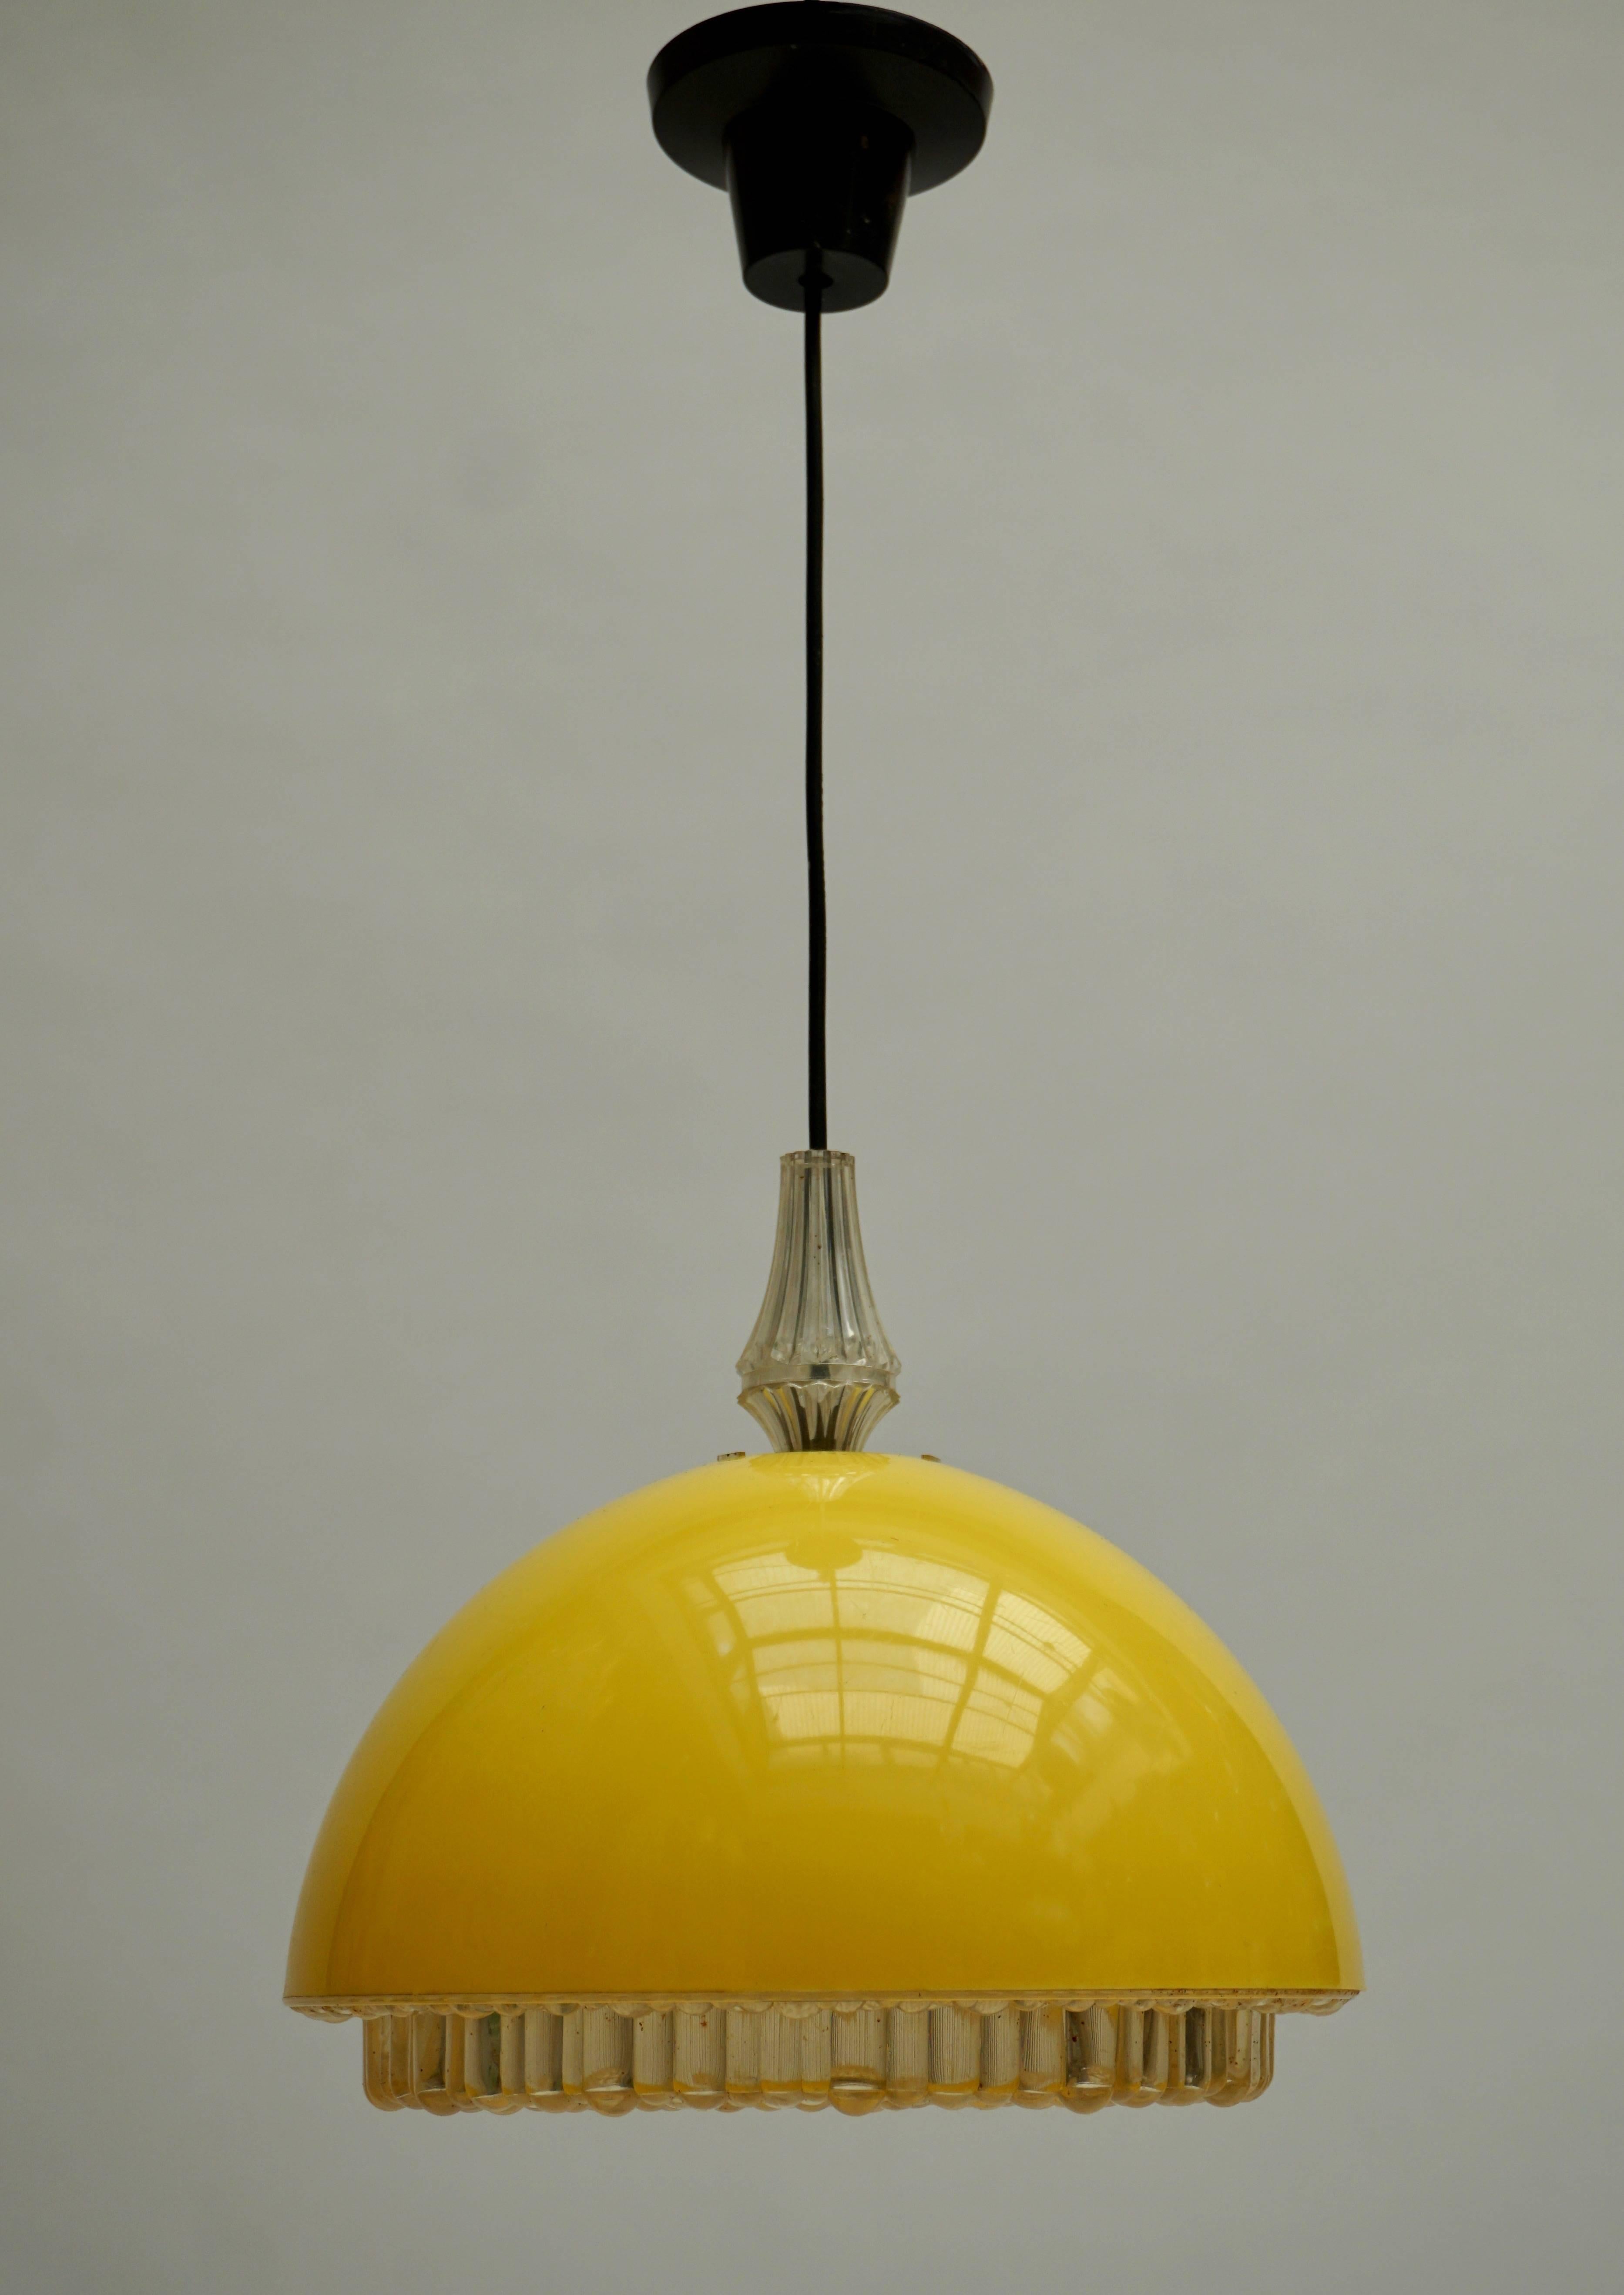 Two acrylic pendant lights.
Measures: Diameter 30 cm.
Height fixture 18 cm.
Total height 90 cm.